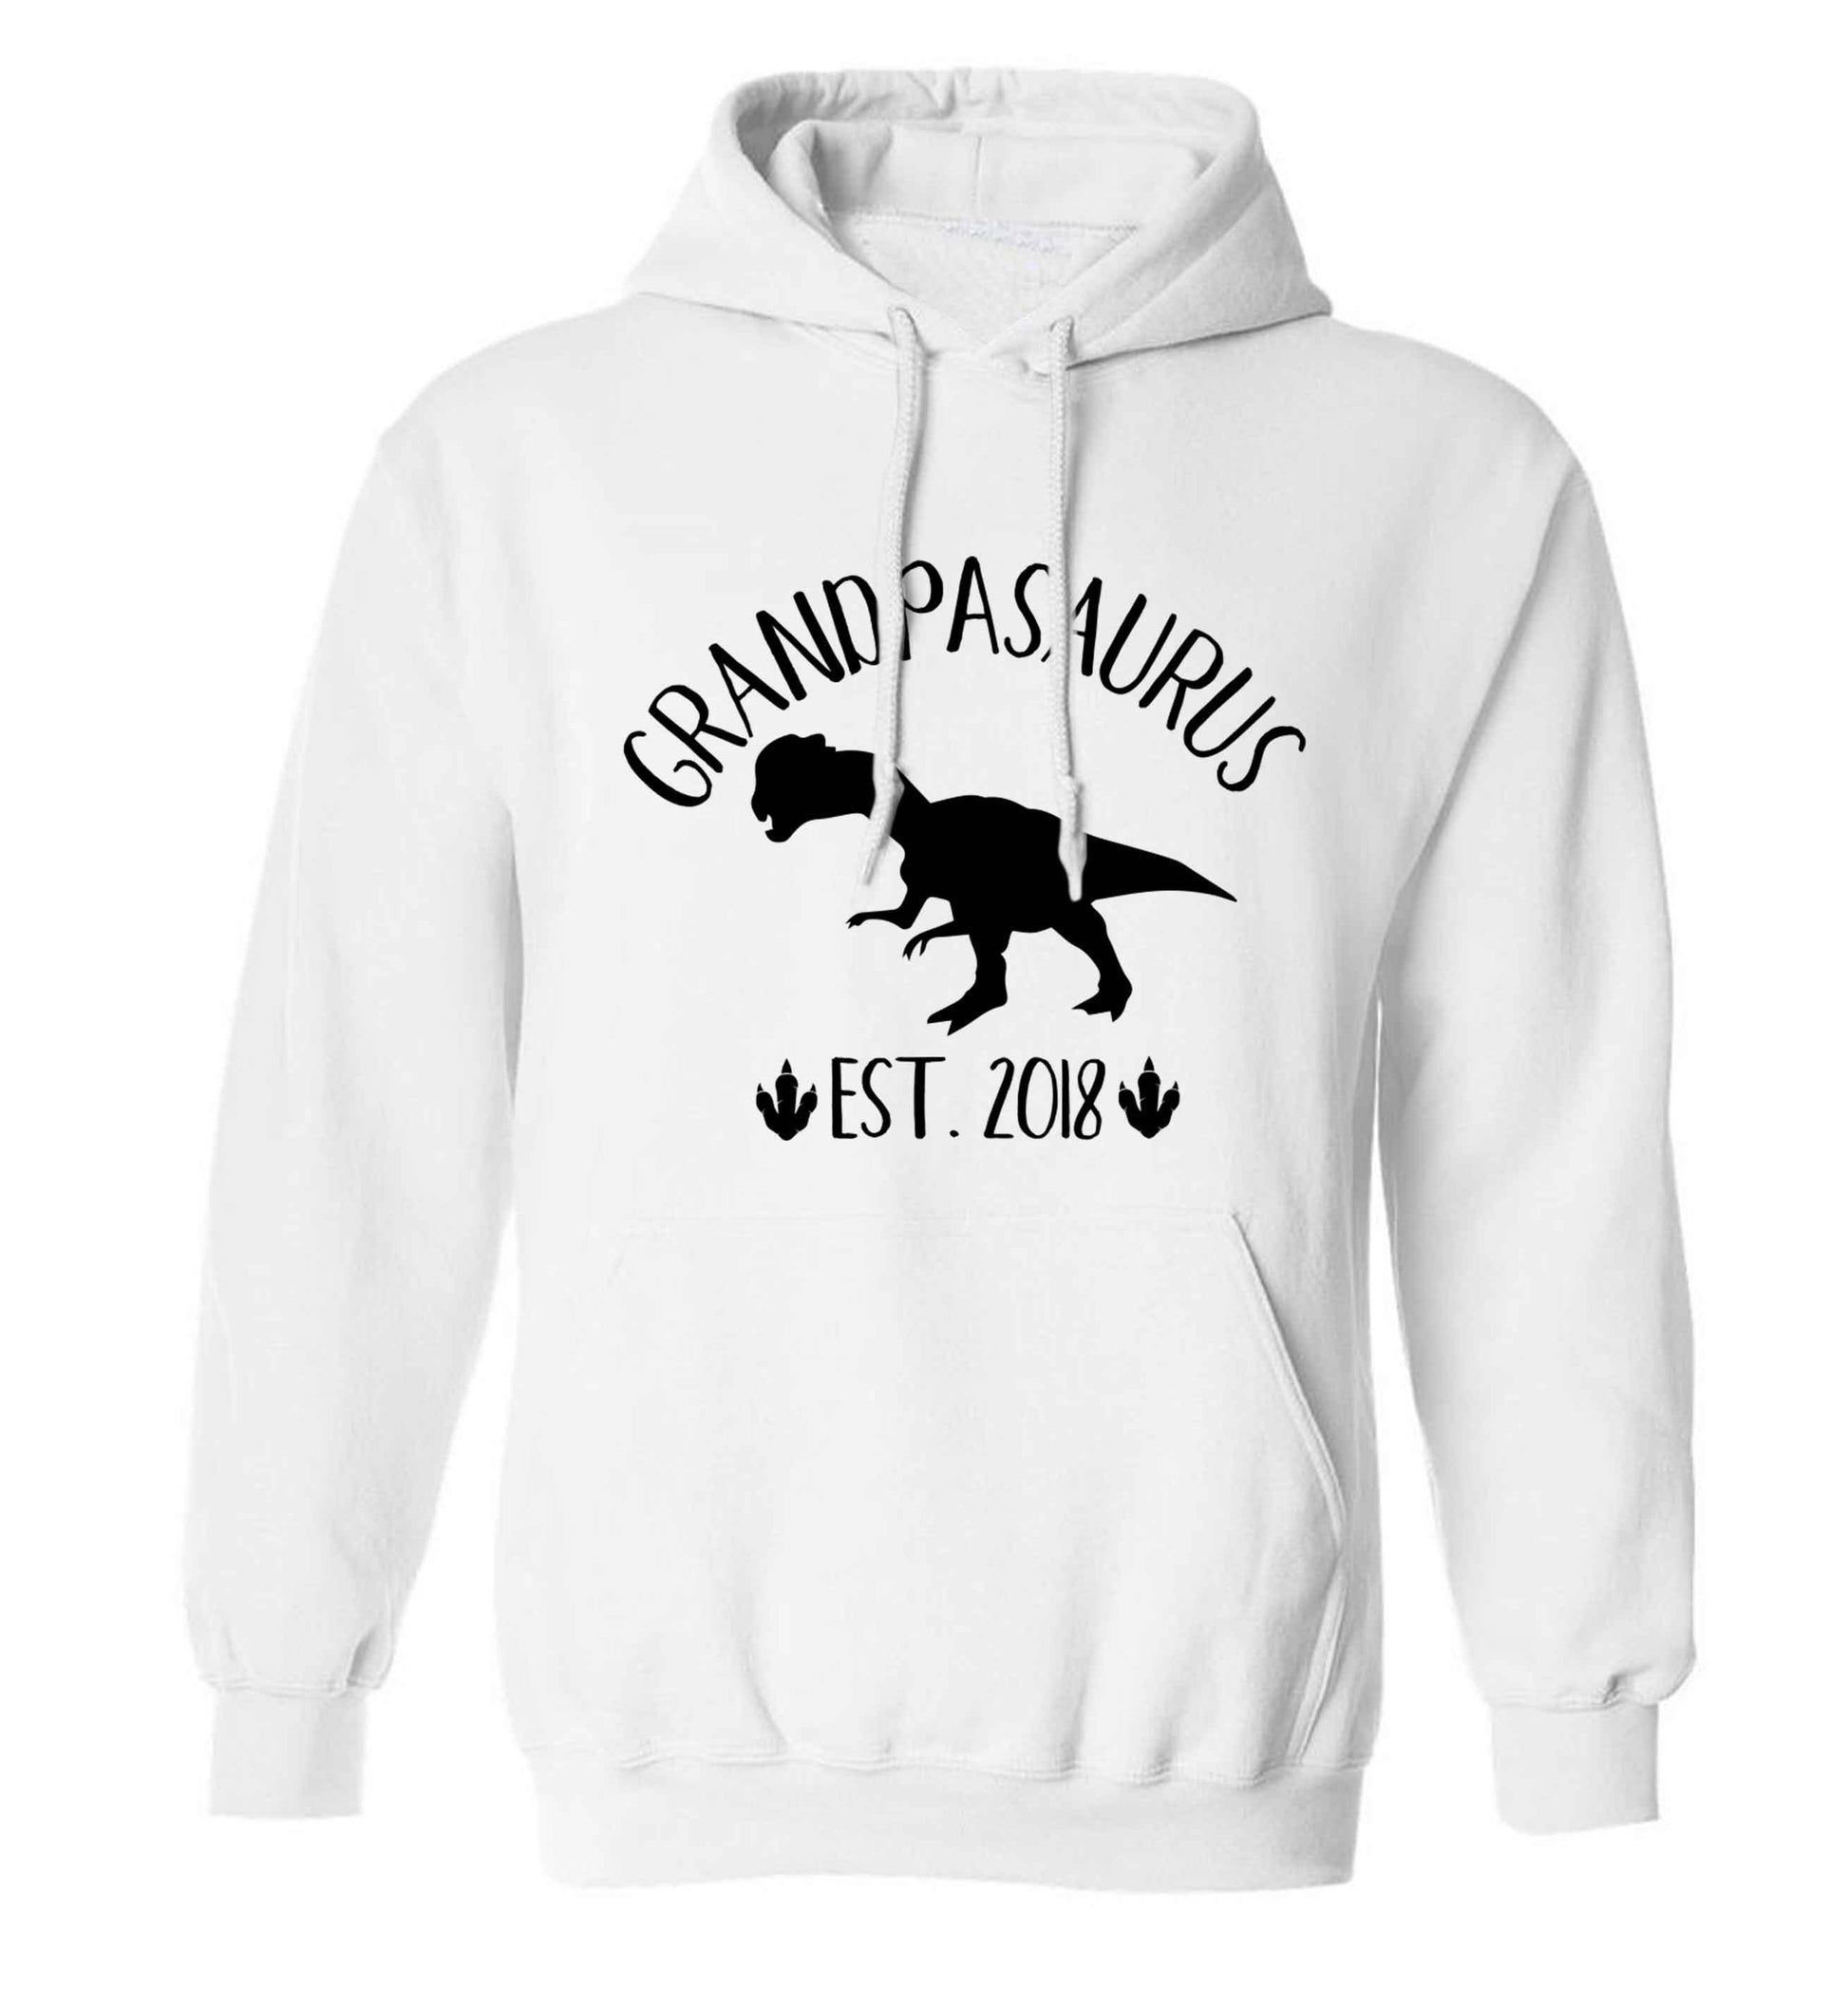 Personalised grandpasaurus since (custom date) adults unisex white hoodie 2XL